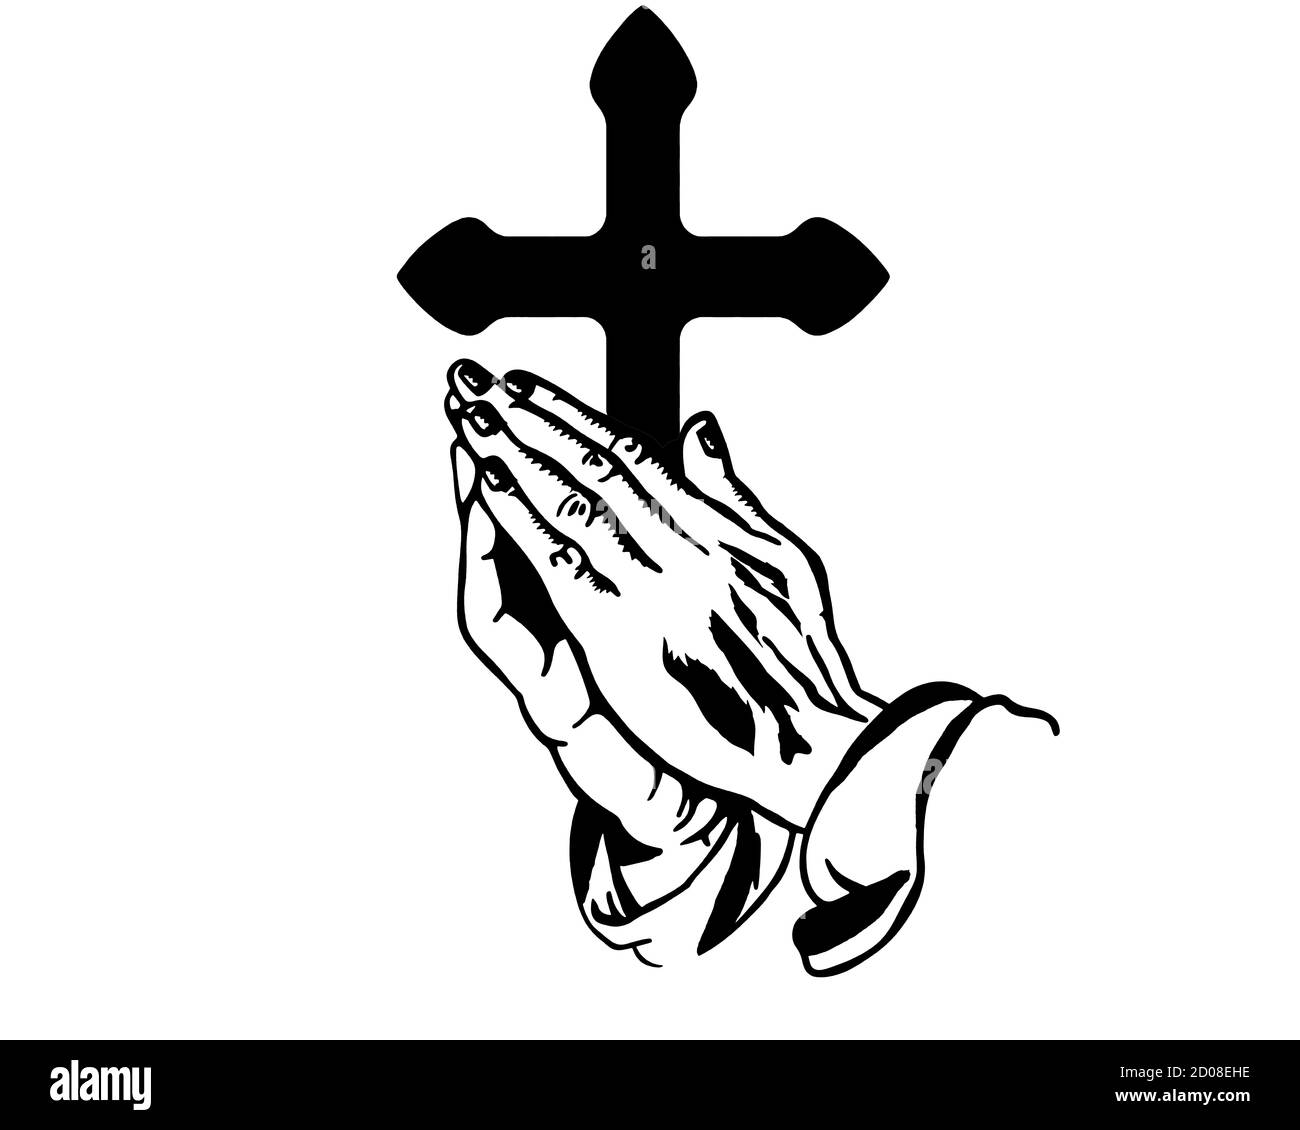 Praying hands dürer hands Black and White Stock Photos & Images - Alamy